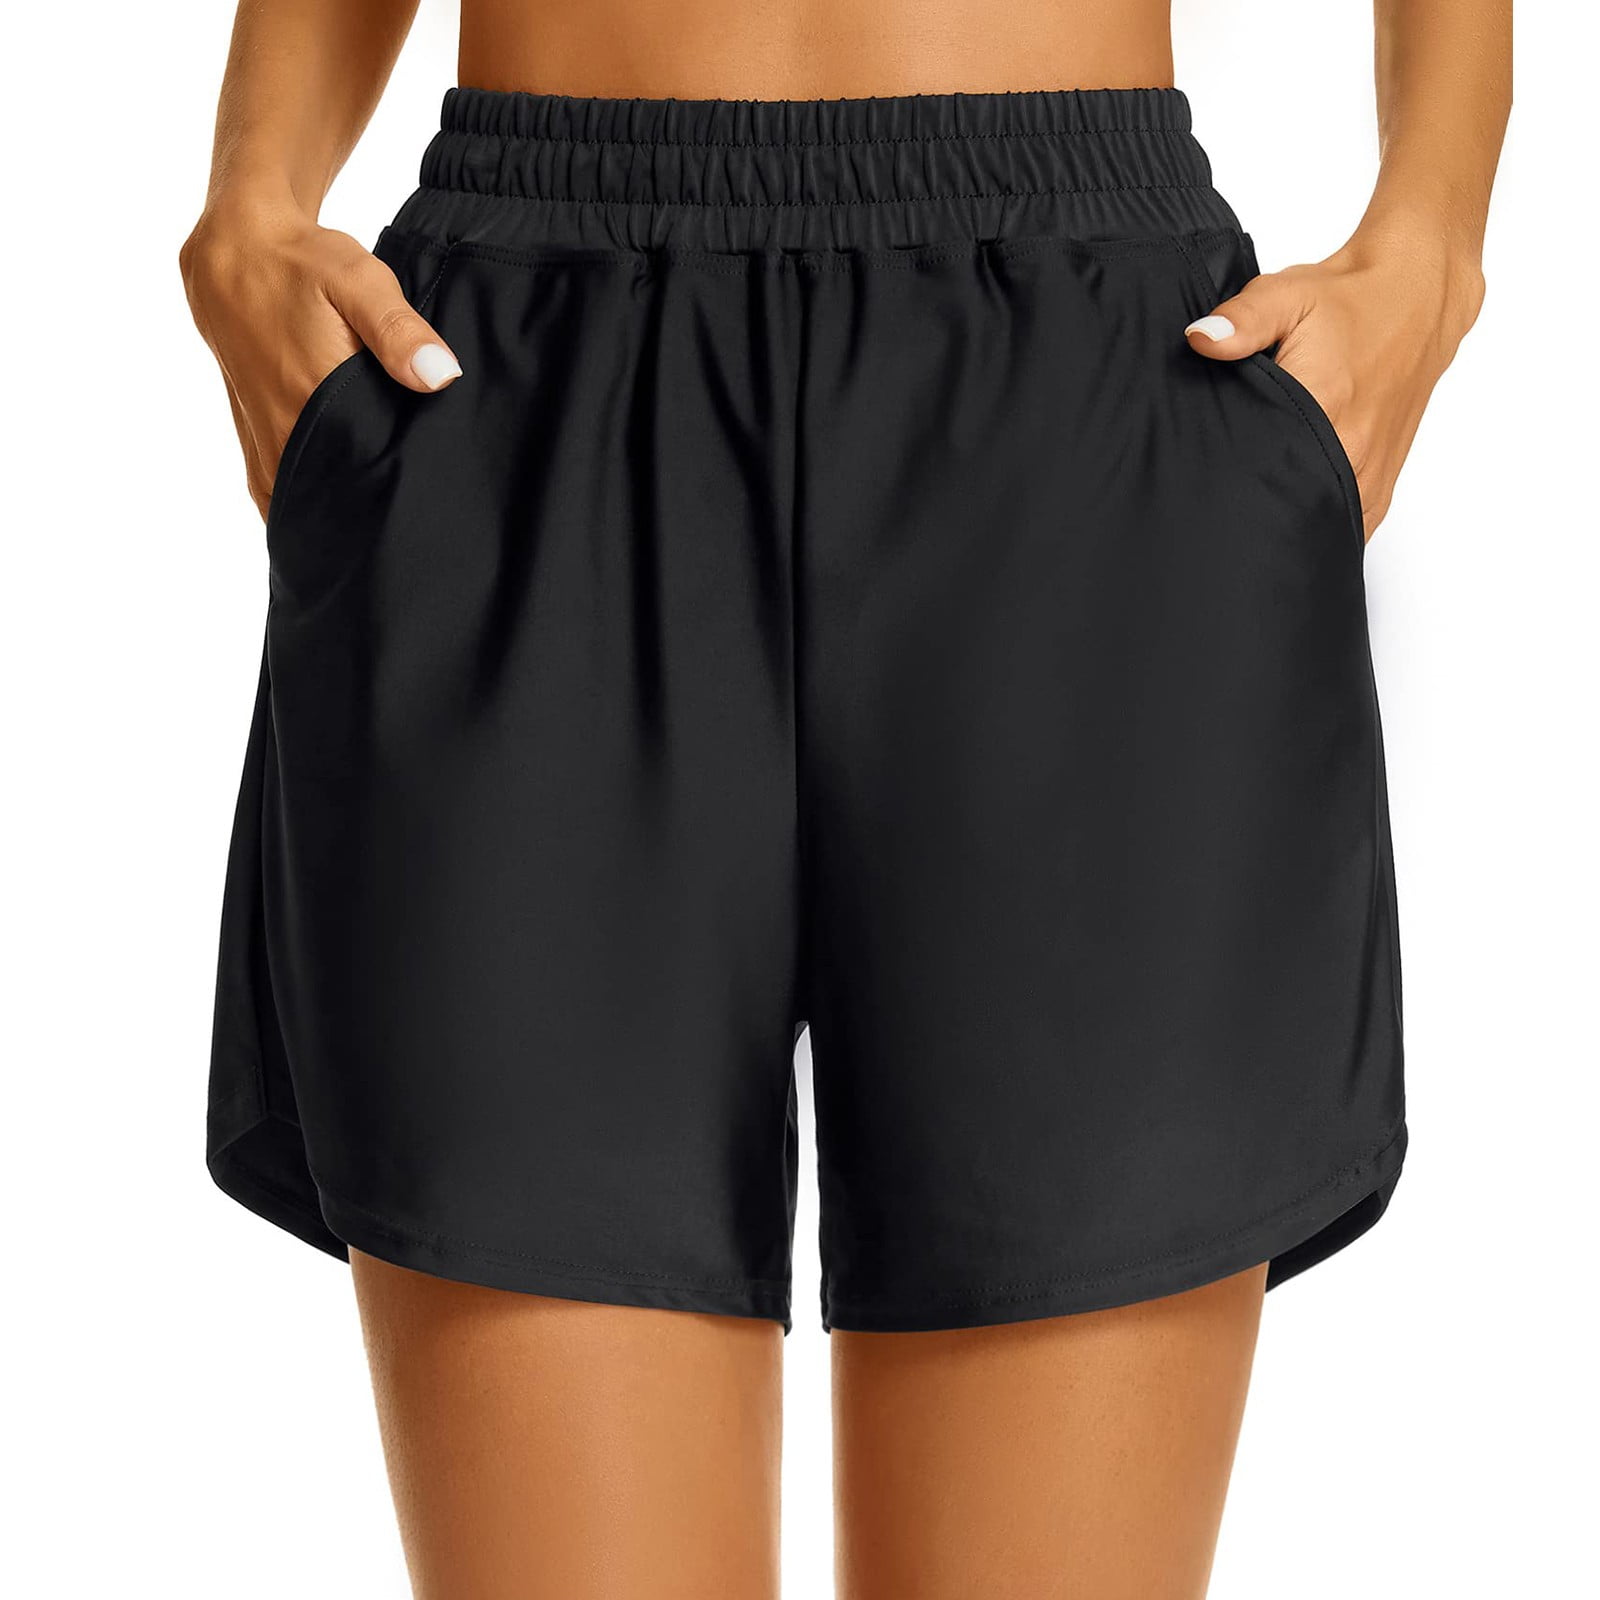 NKOOGH Swim Suit Shorts Plus Size Swim Pants Cover Up Women's Swim ...